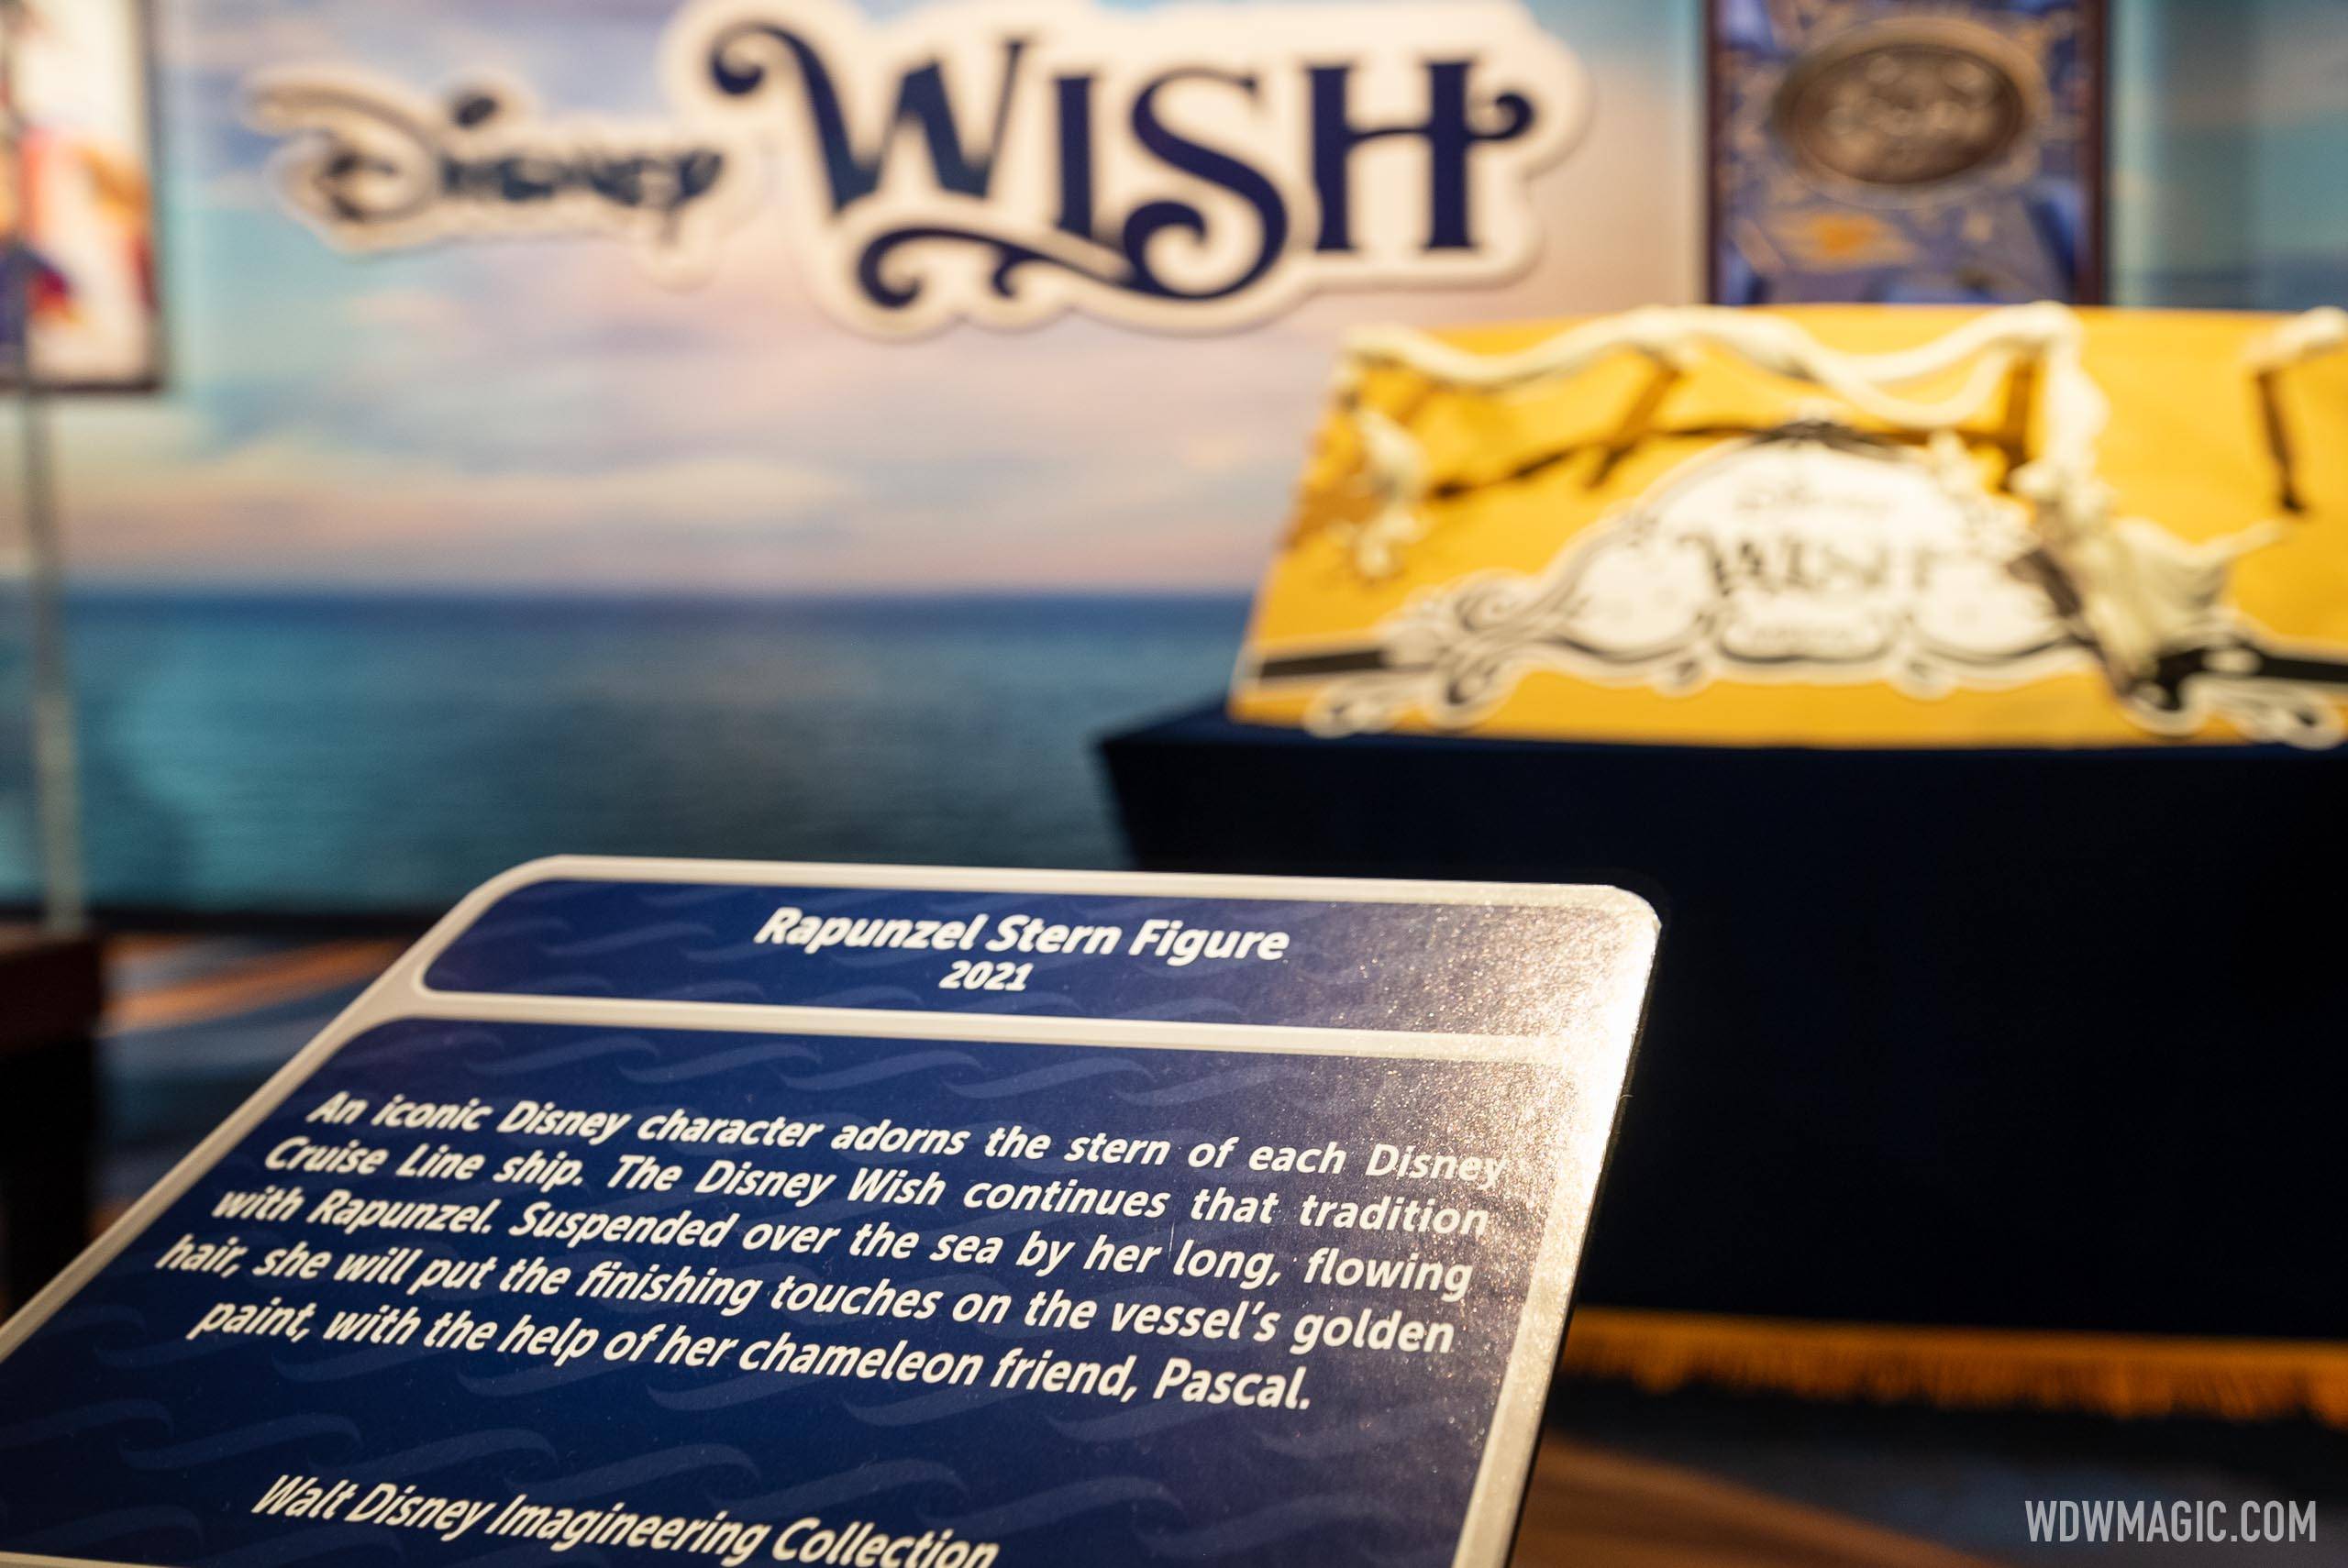 Disney Wish exhibit at Walt Disney Presents